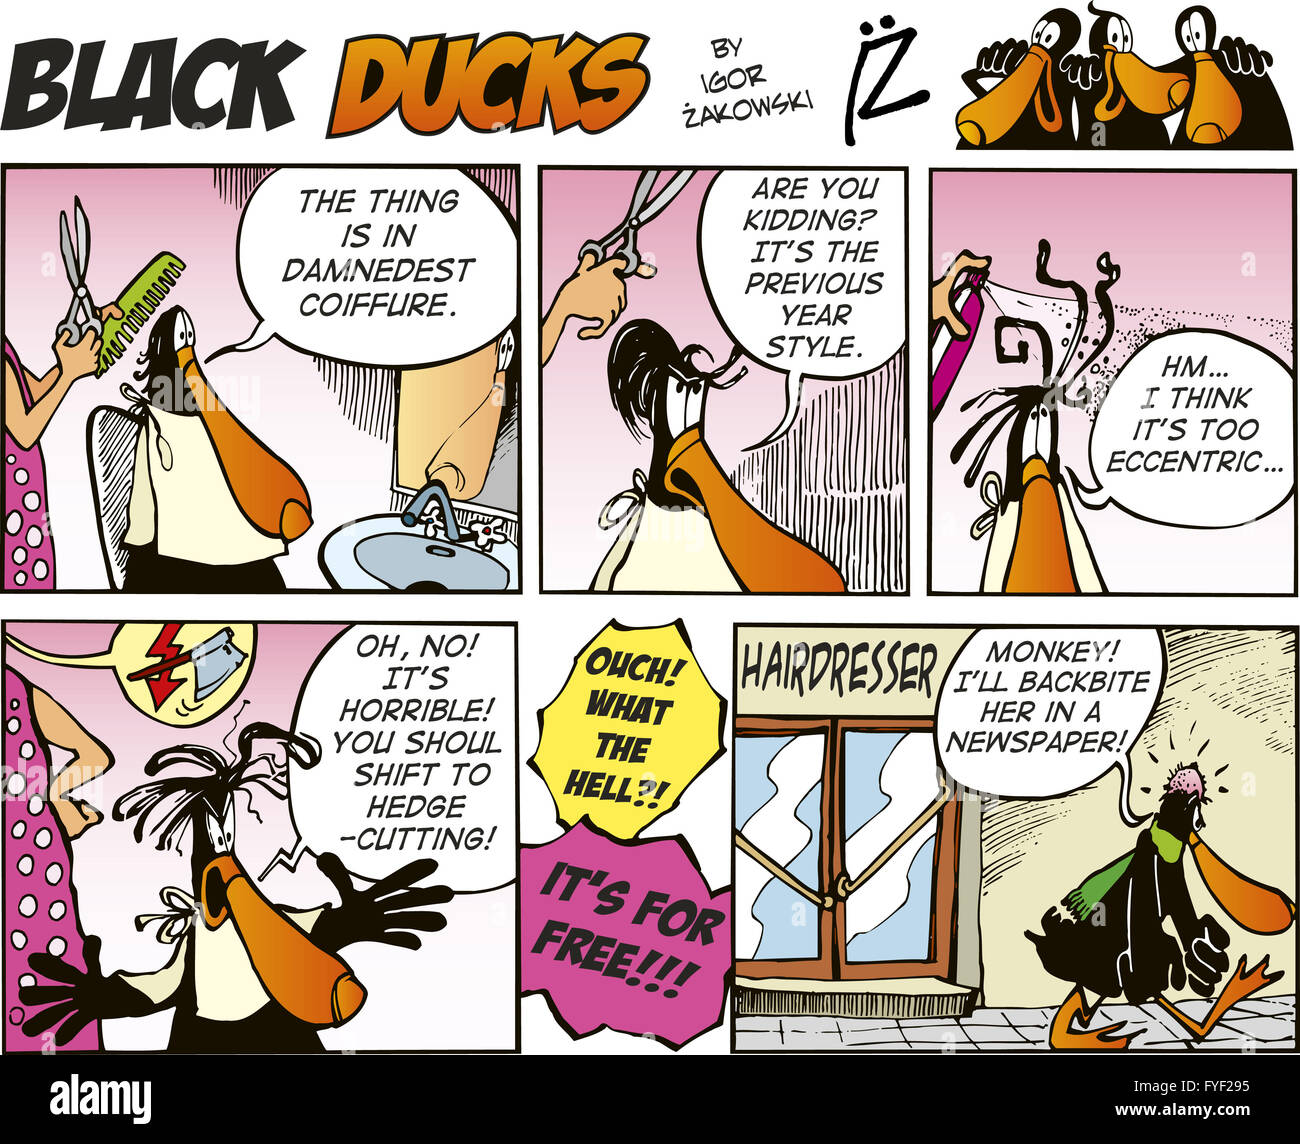 Black Ducks Comic Strip episode 9 Stock Photo